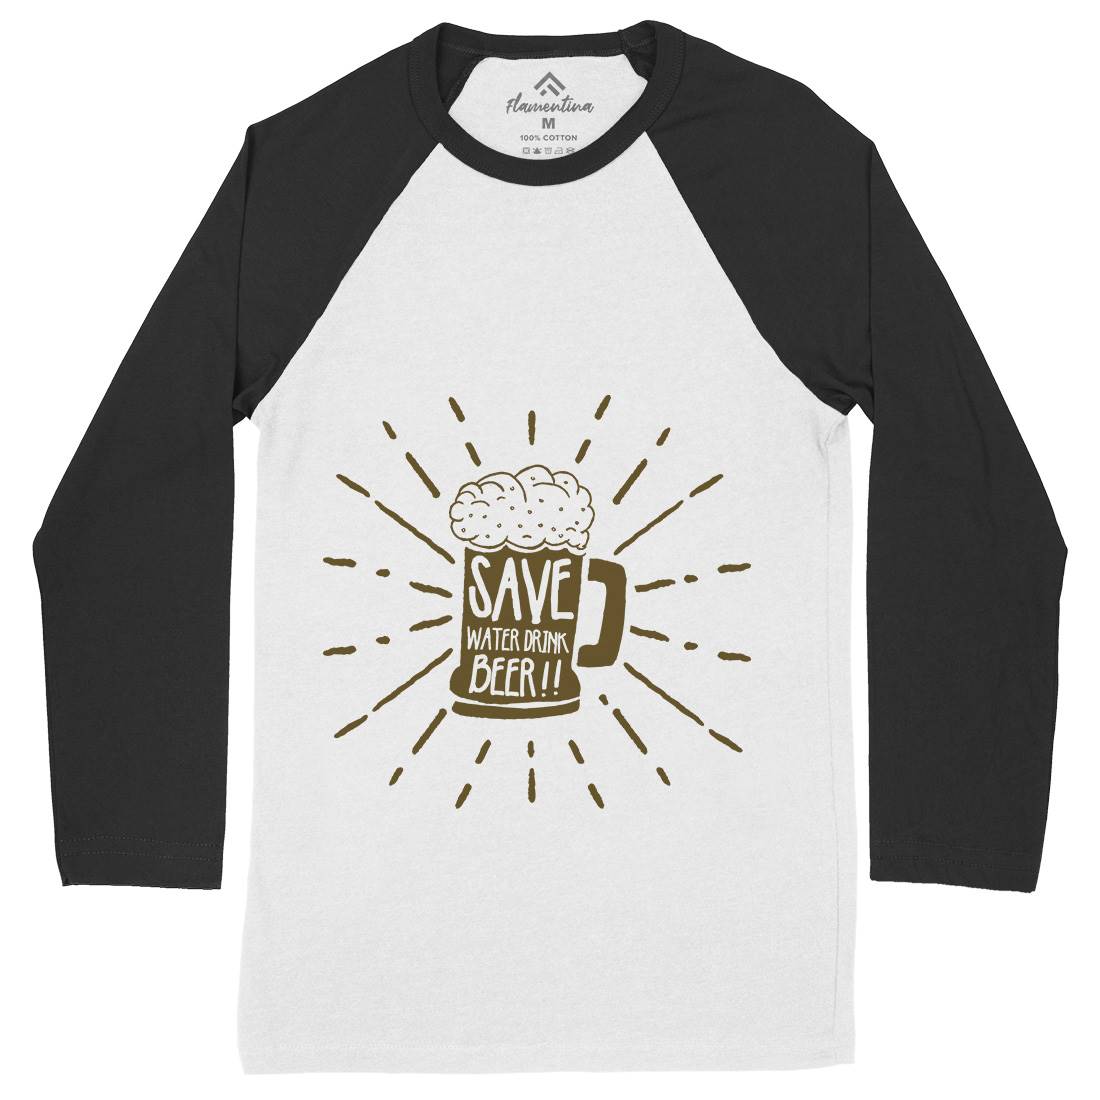 Save Water Mens Long Sleeve Baseball T-Shirt Drinks A368